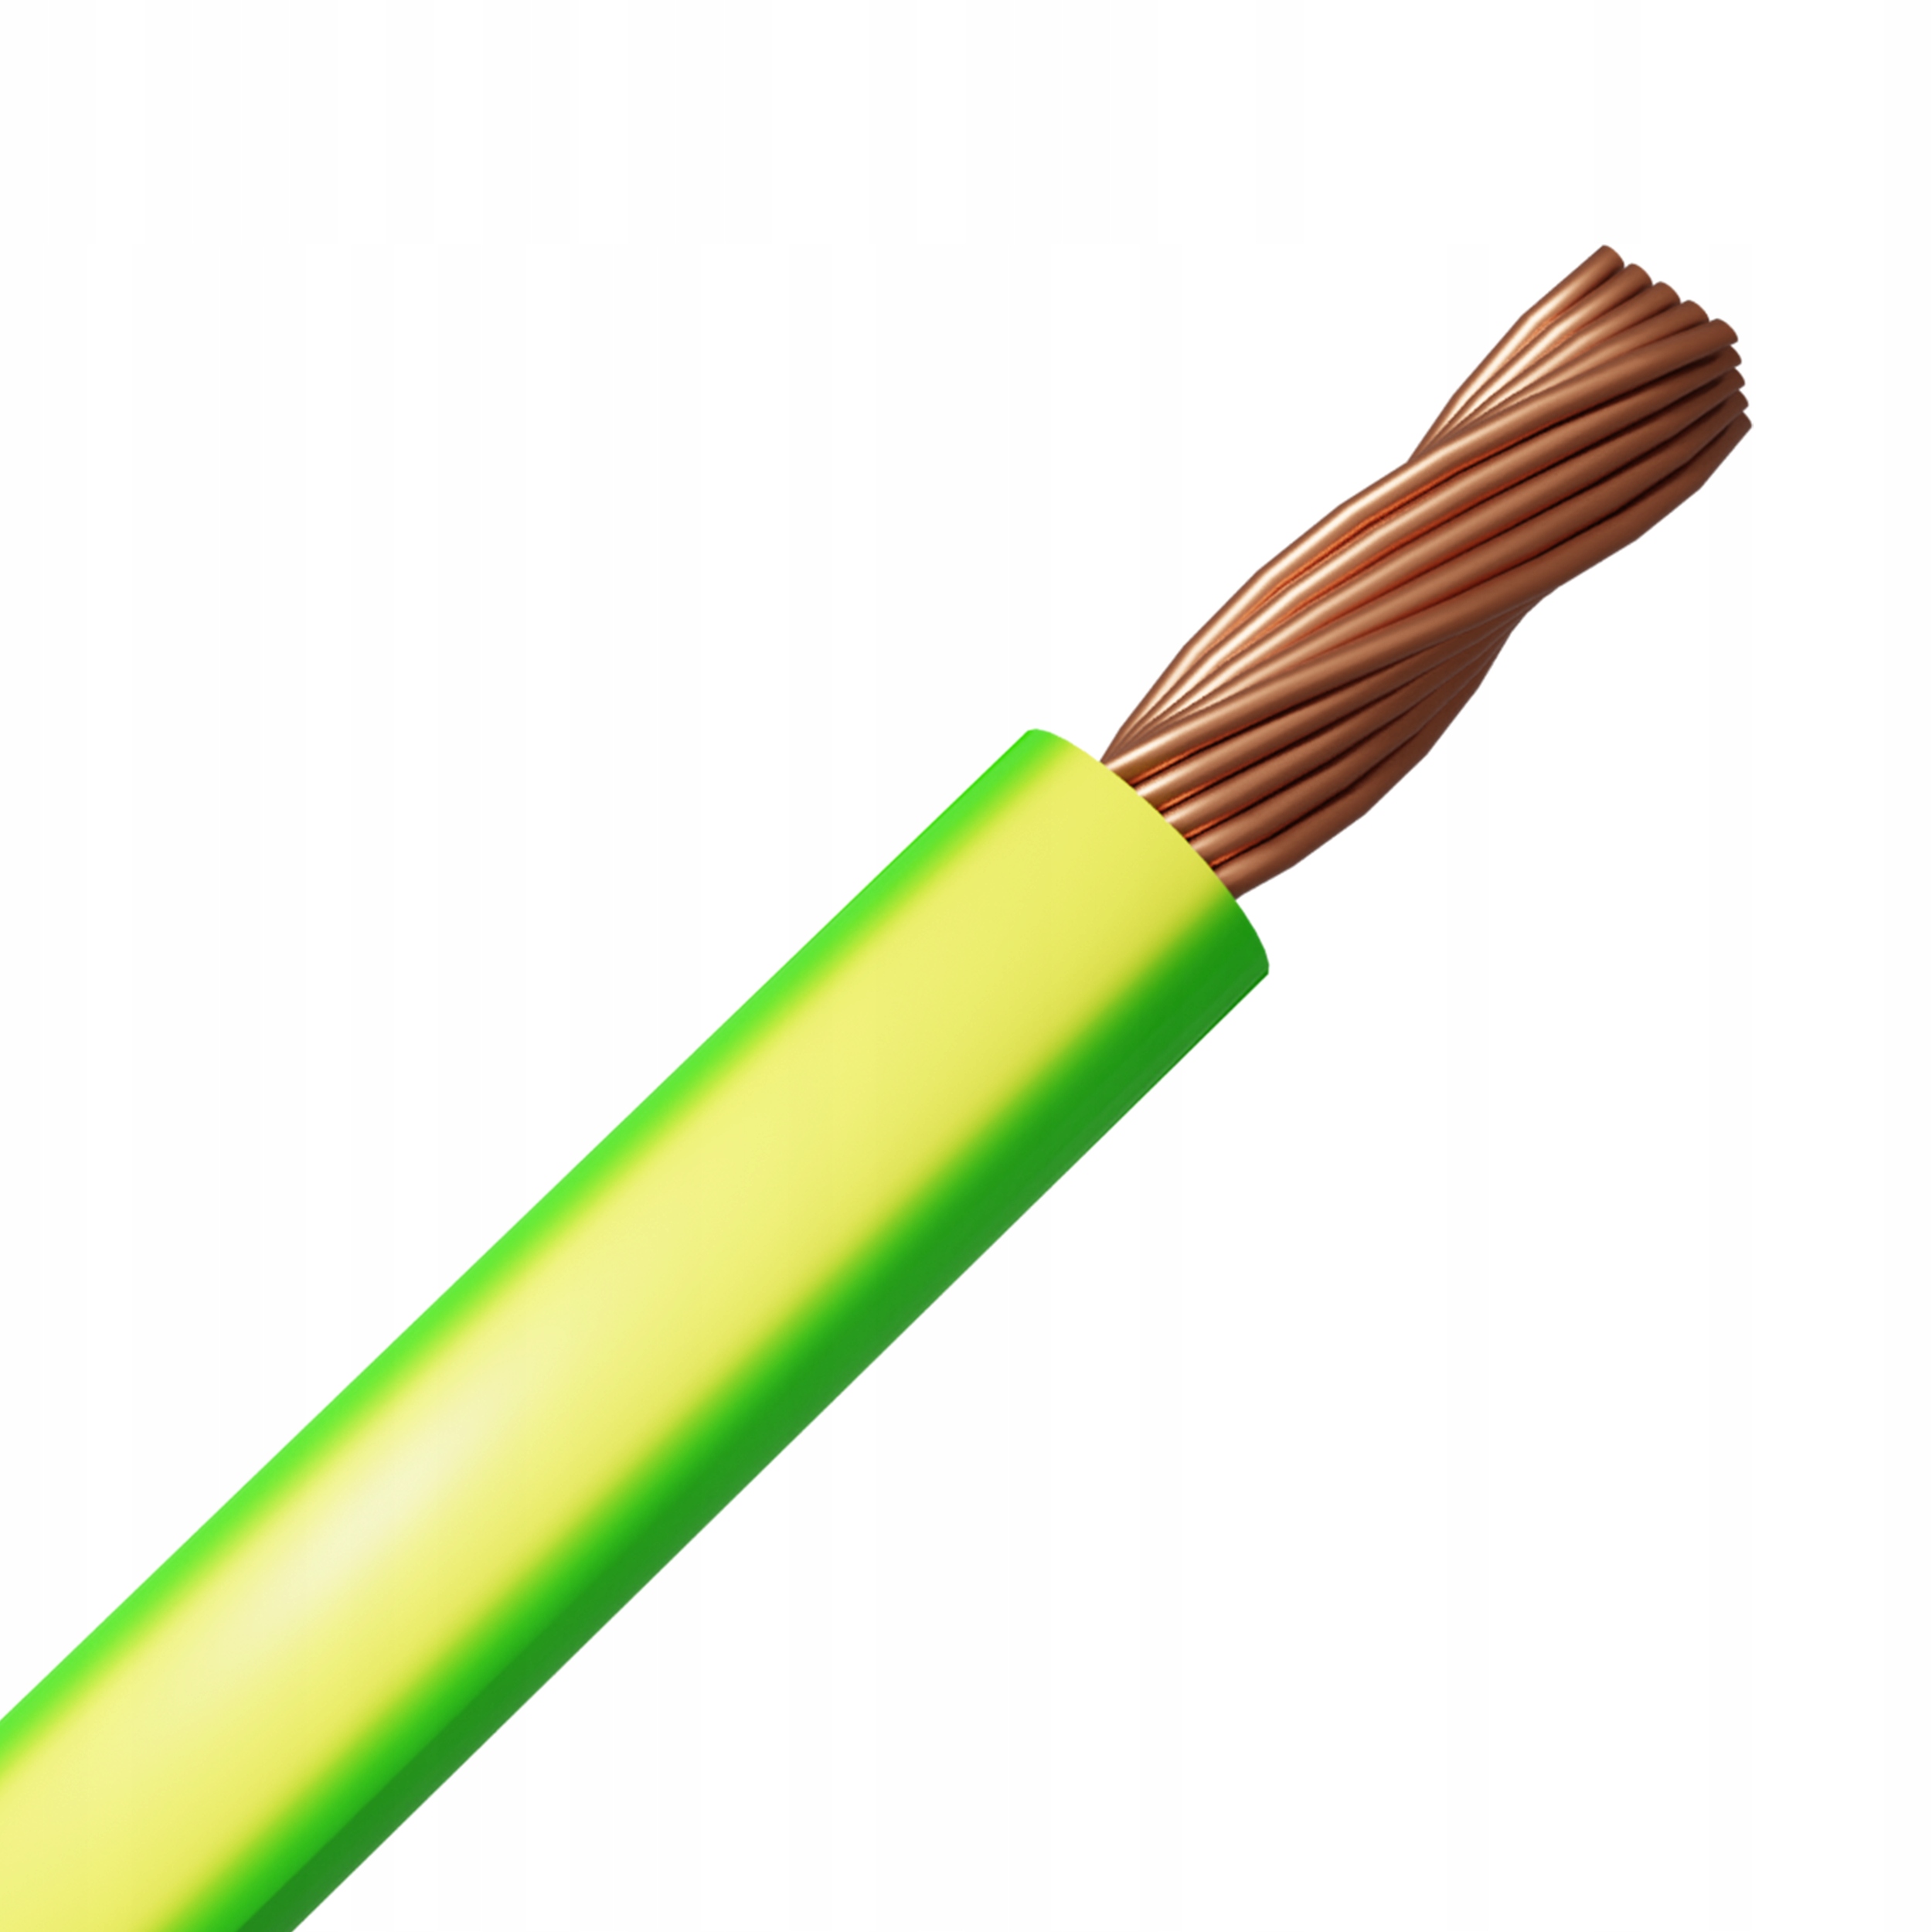 Przewód linka LgY żółto-zielony 10mm2 750V - 1m Telefonika Kable G-002974